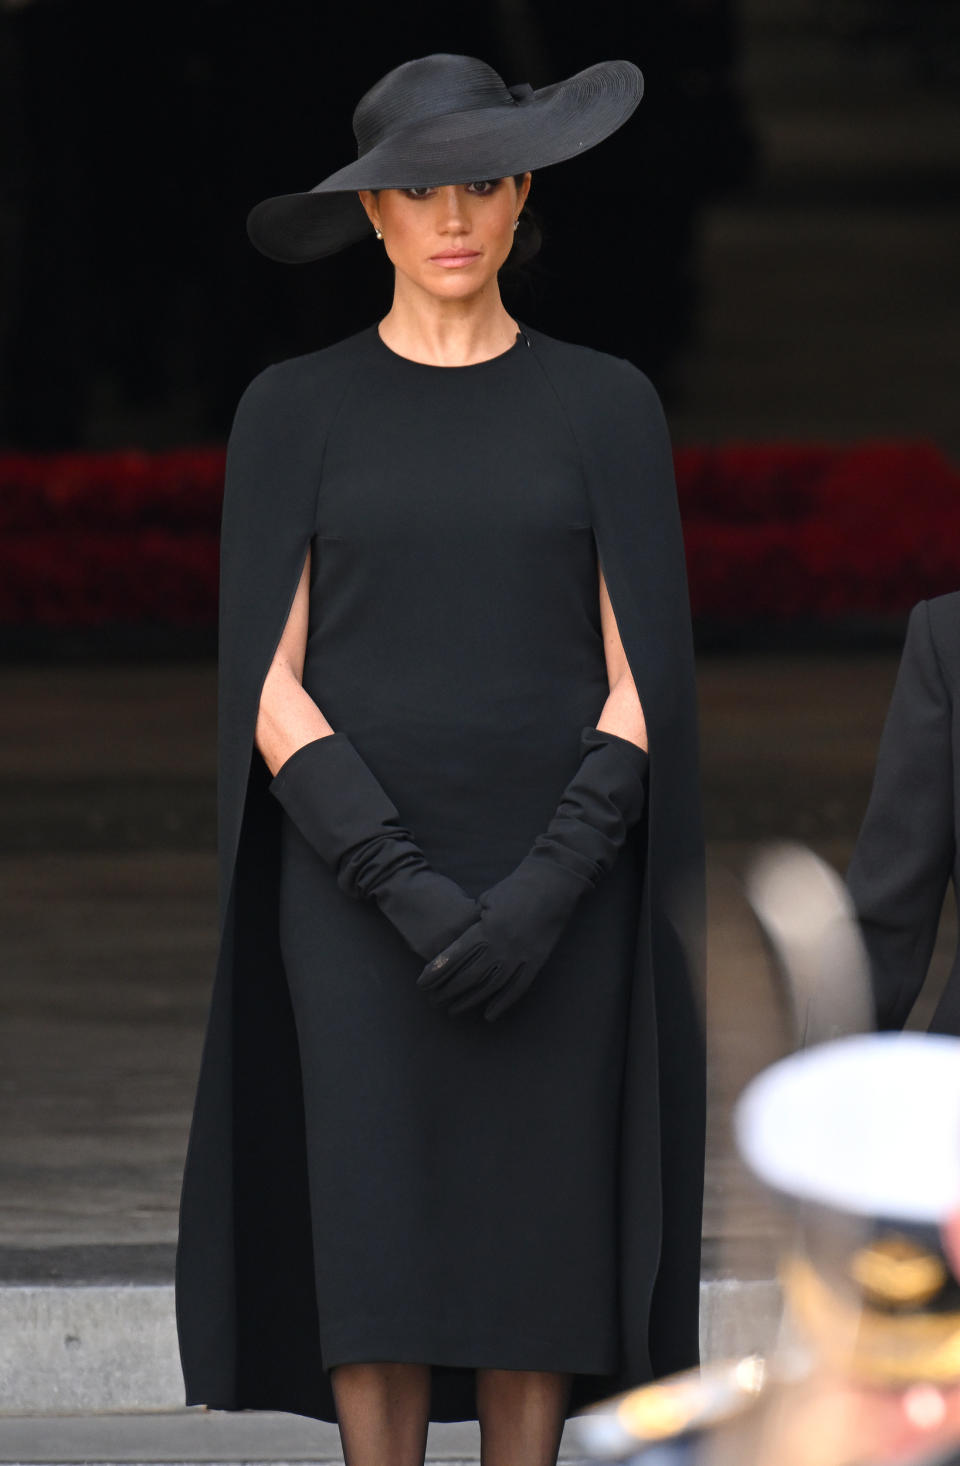 Meghan Markle at Queen Elizabeth's funeral (Karwai Tang / WireImage)